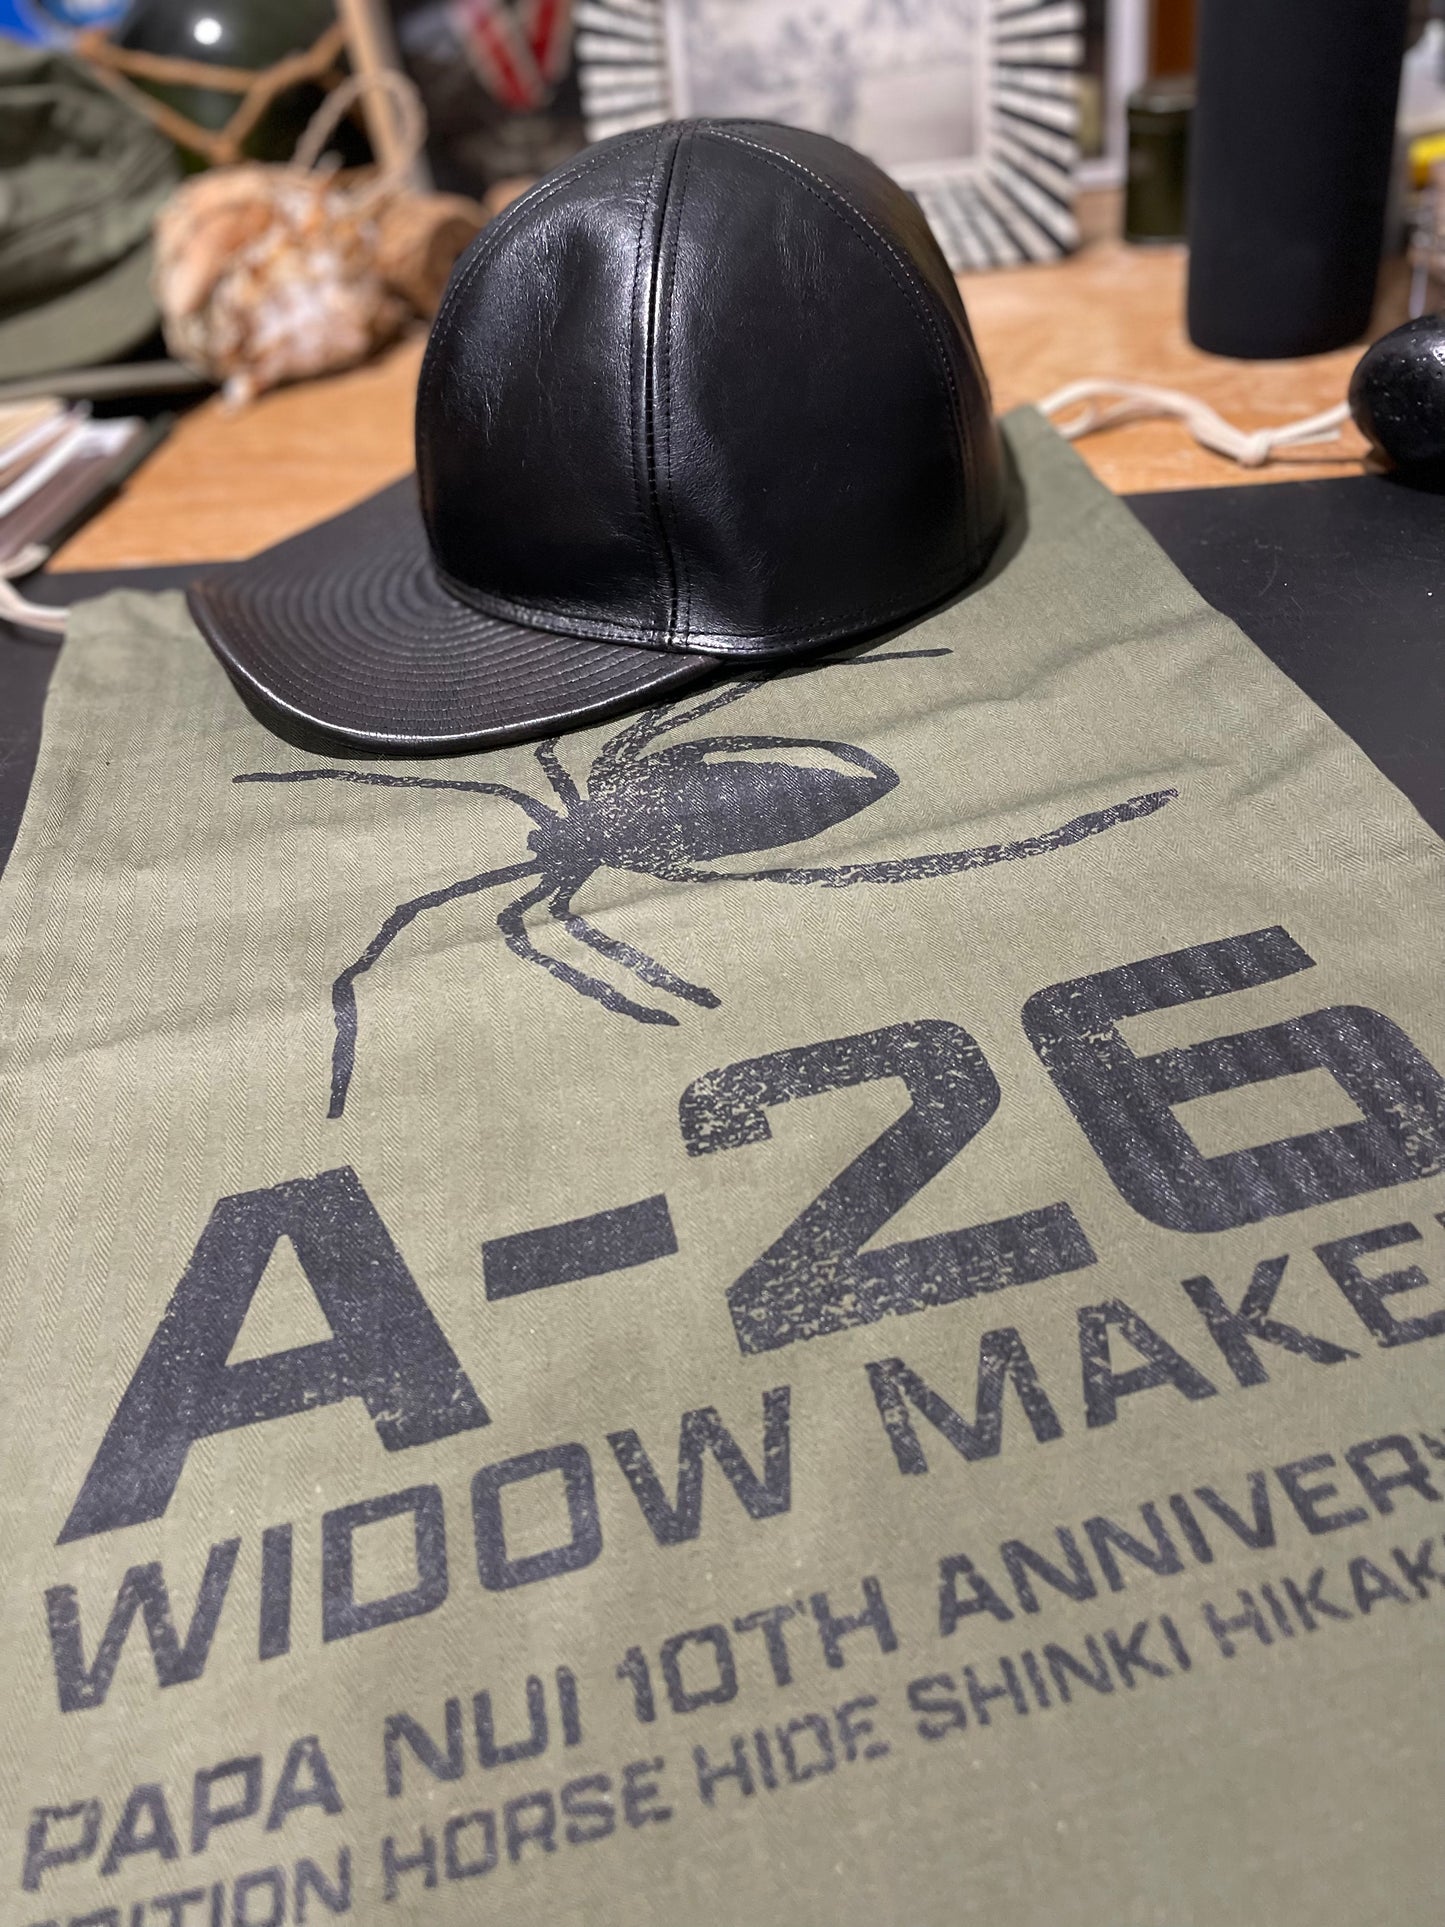 A-26 Shinki Horse Hide cap. 10th Anniversary Issue Widow Maker..